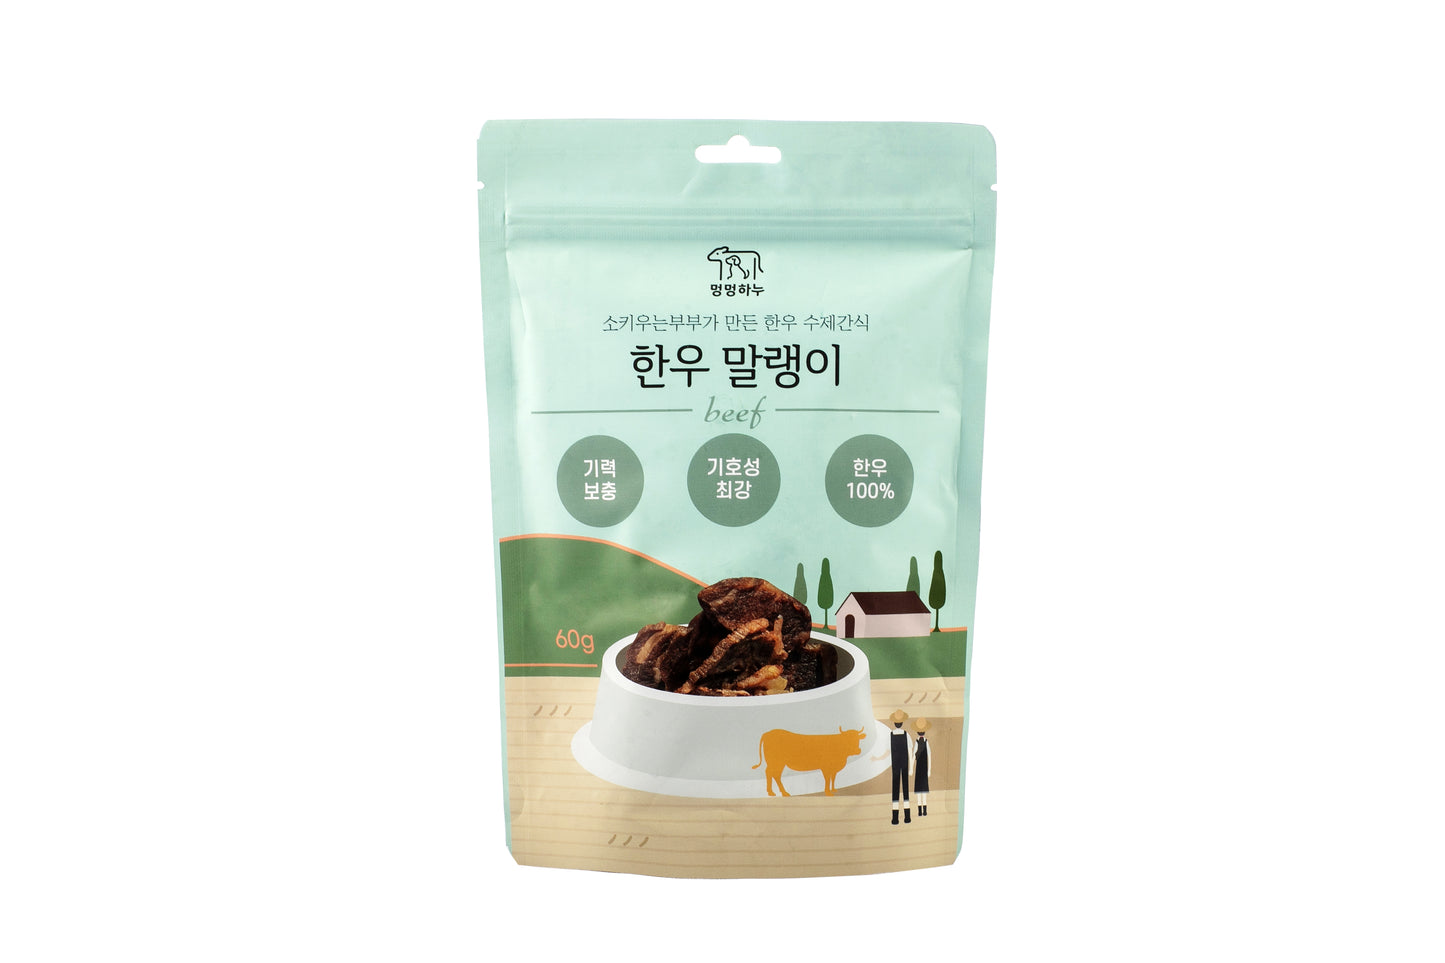 Savory Delights: Homemade Korean Beef Snack from Premium Korean Beef Mince